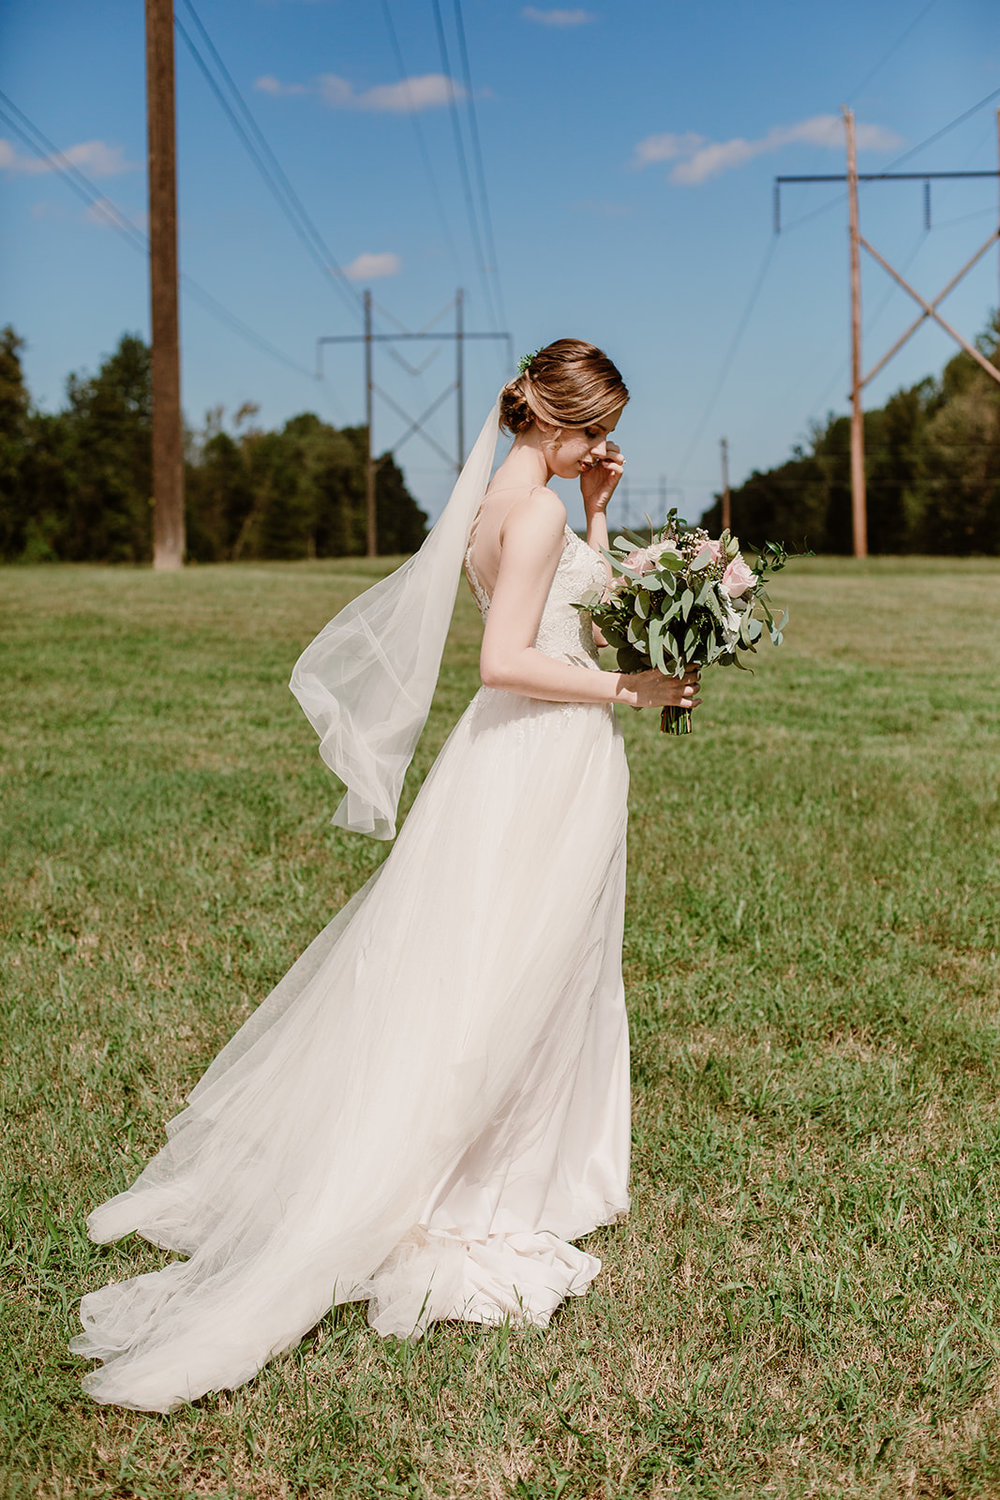  Bride with her bridesmaids | Intimate Wedding | Fredericksburg, VA | Sarah Mattozzi Photography 